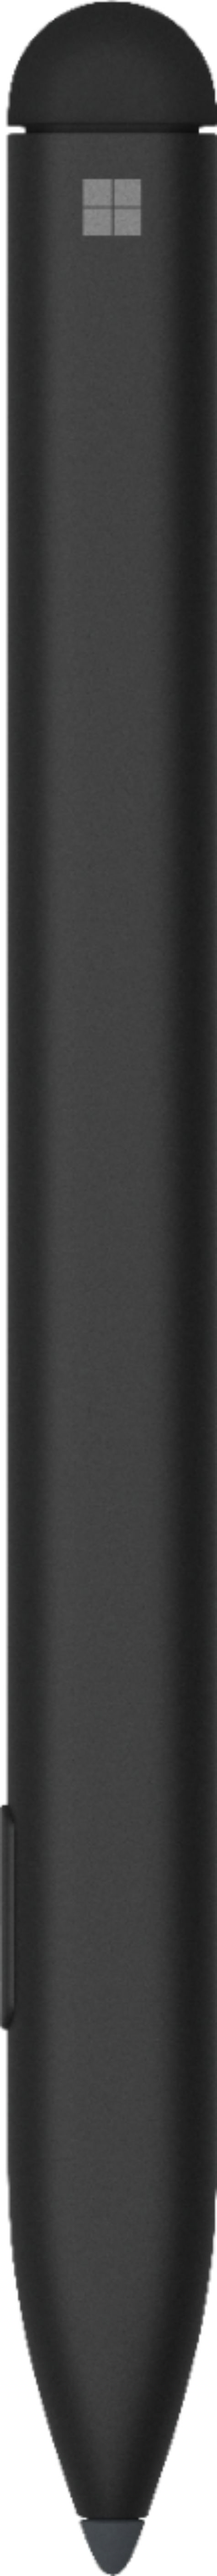 Microsoft Surface Slim Pen Black LLK-00001 - Best Buy